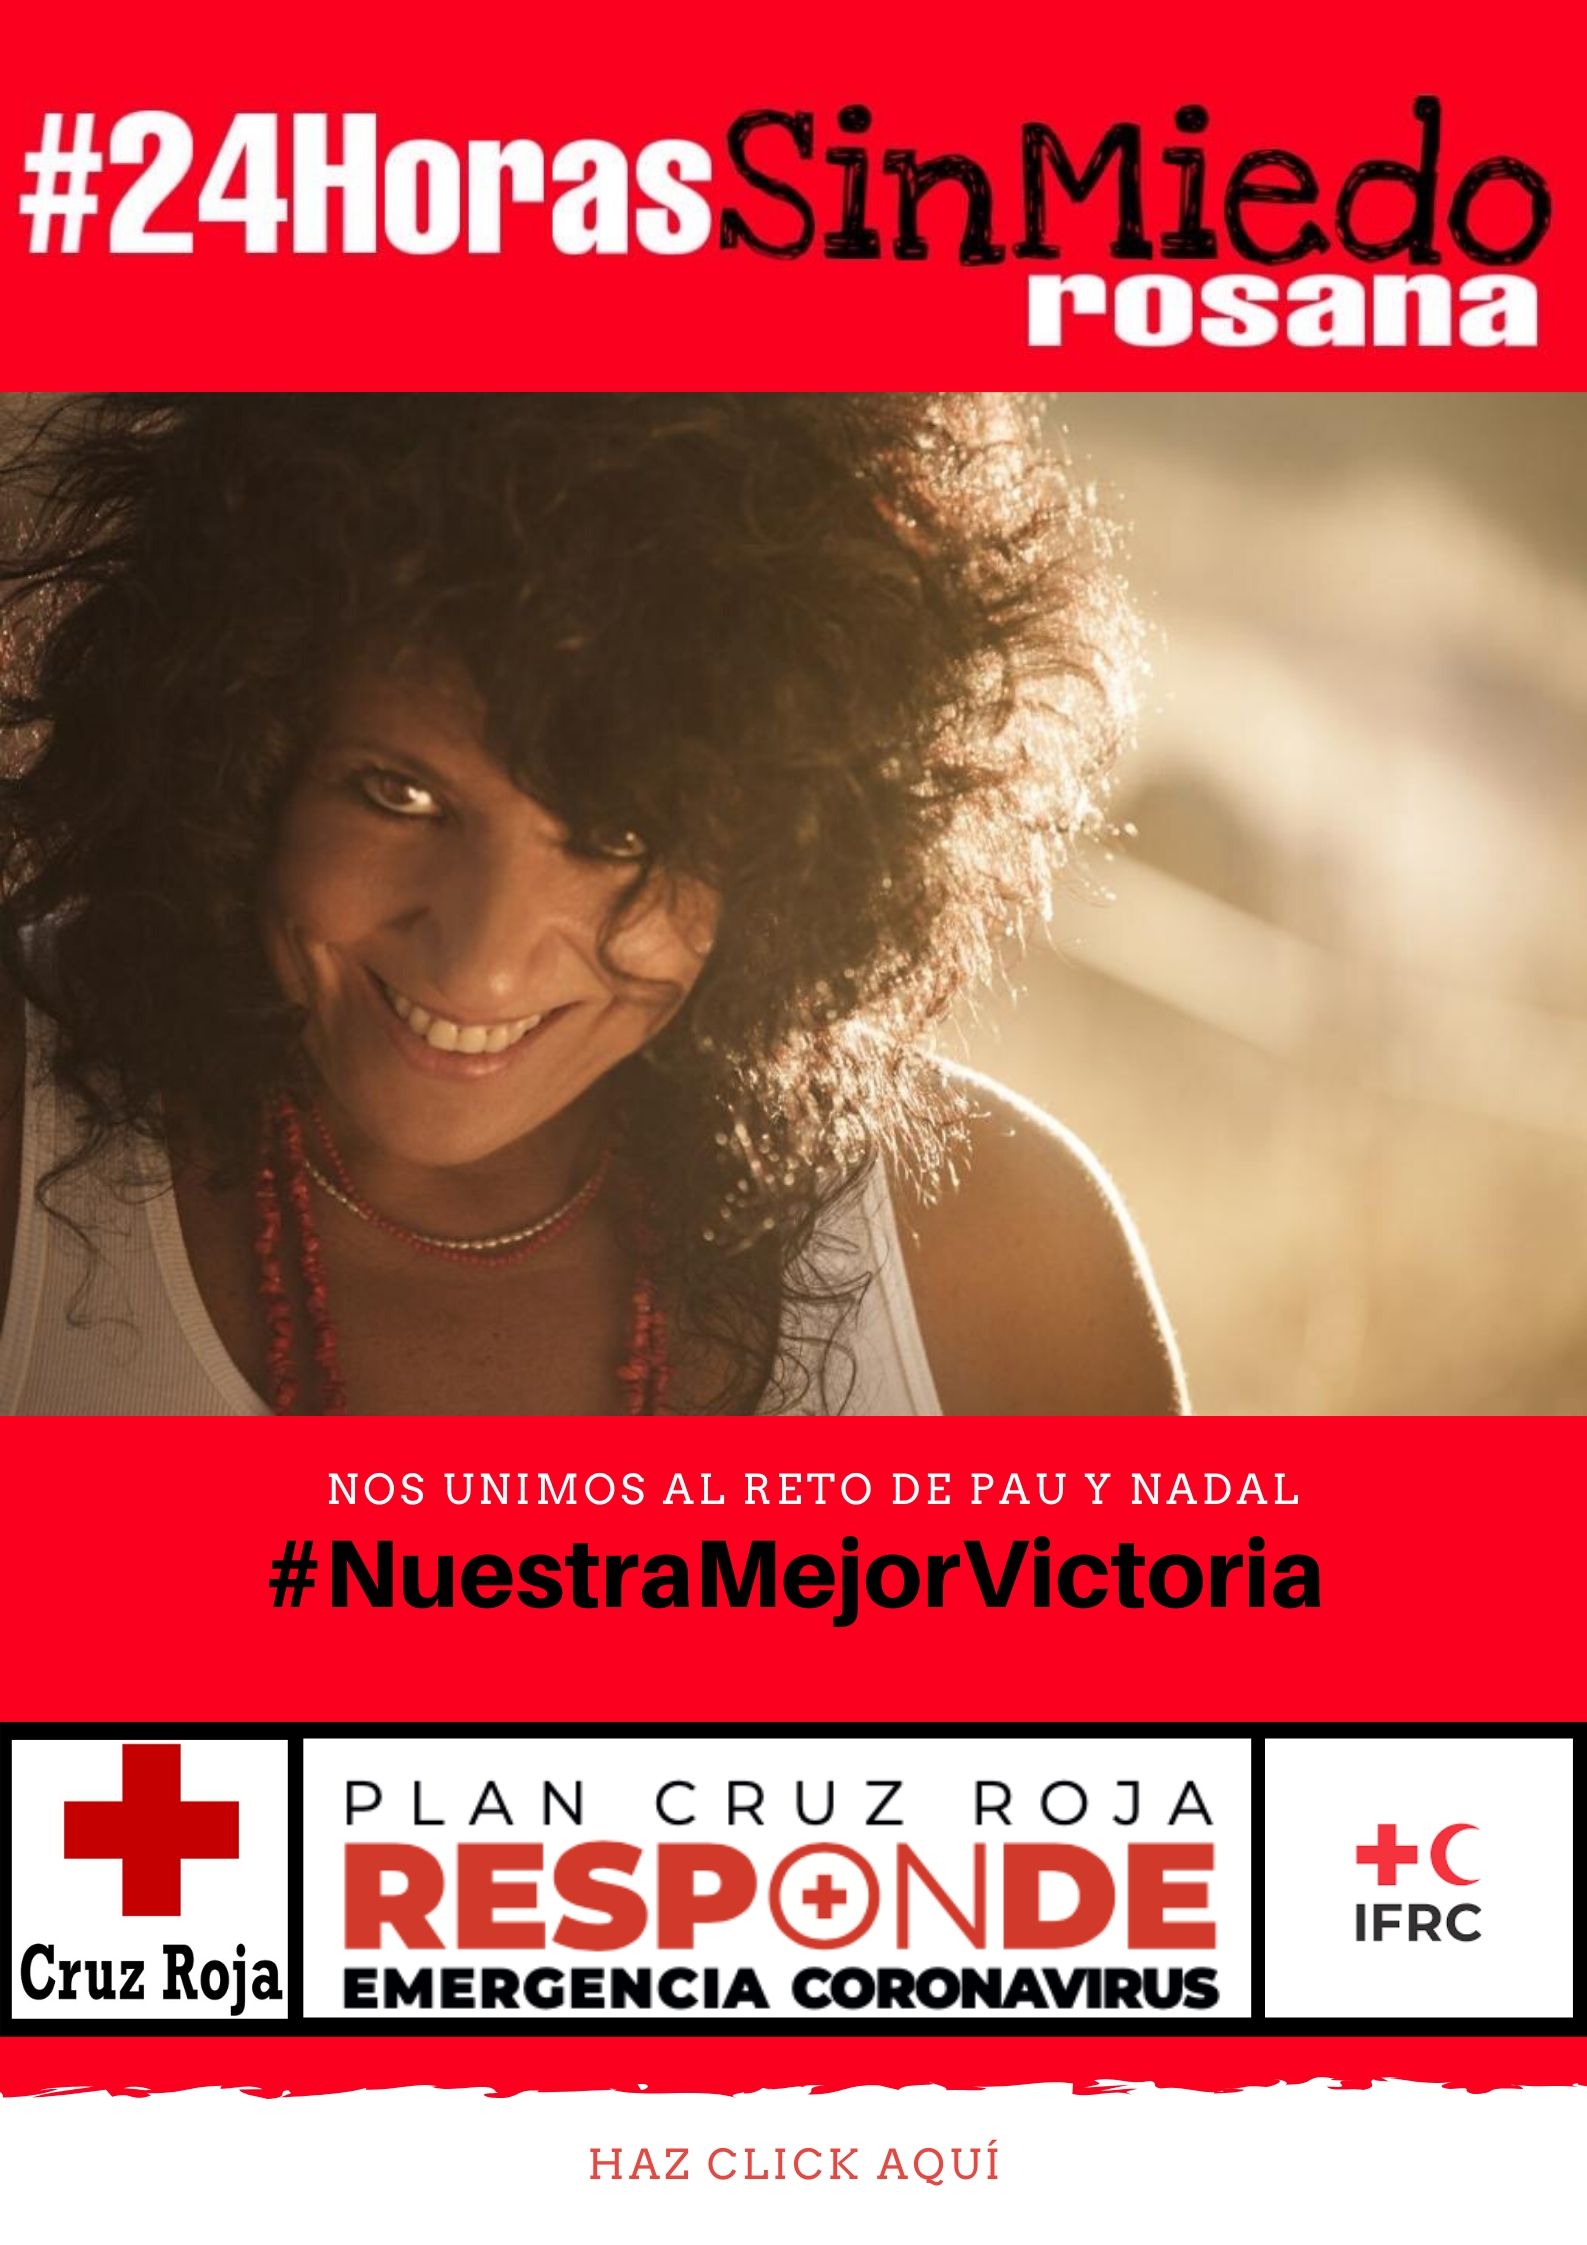 La cantante Rosana se une al plan Cruz Roja RESPONDE